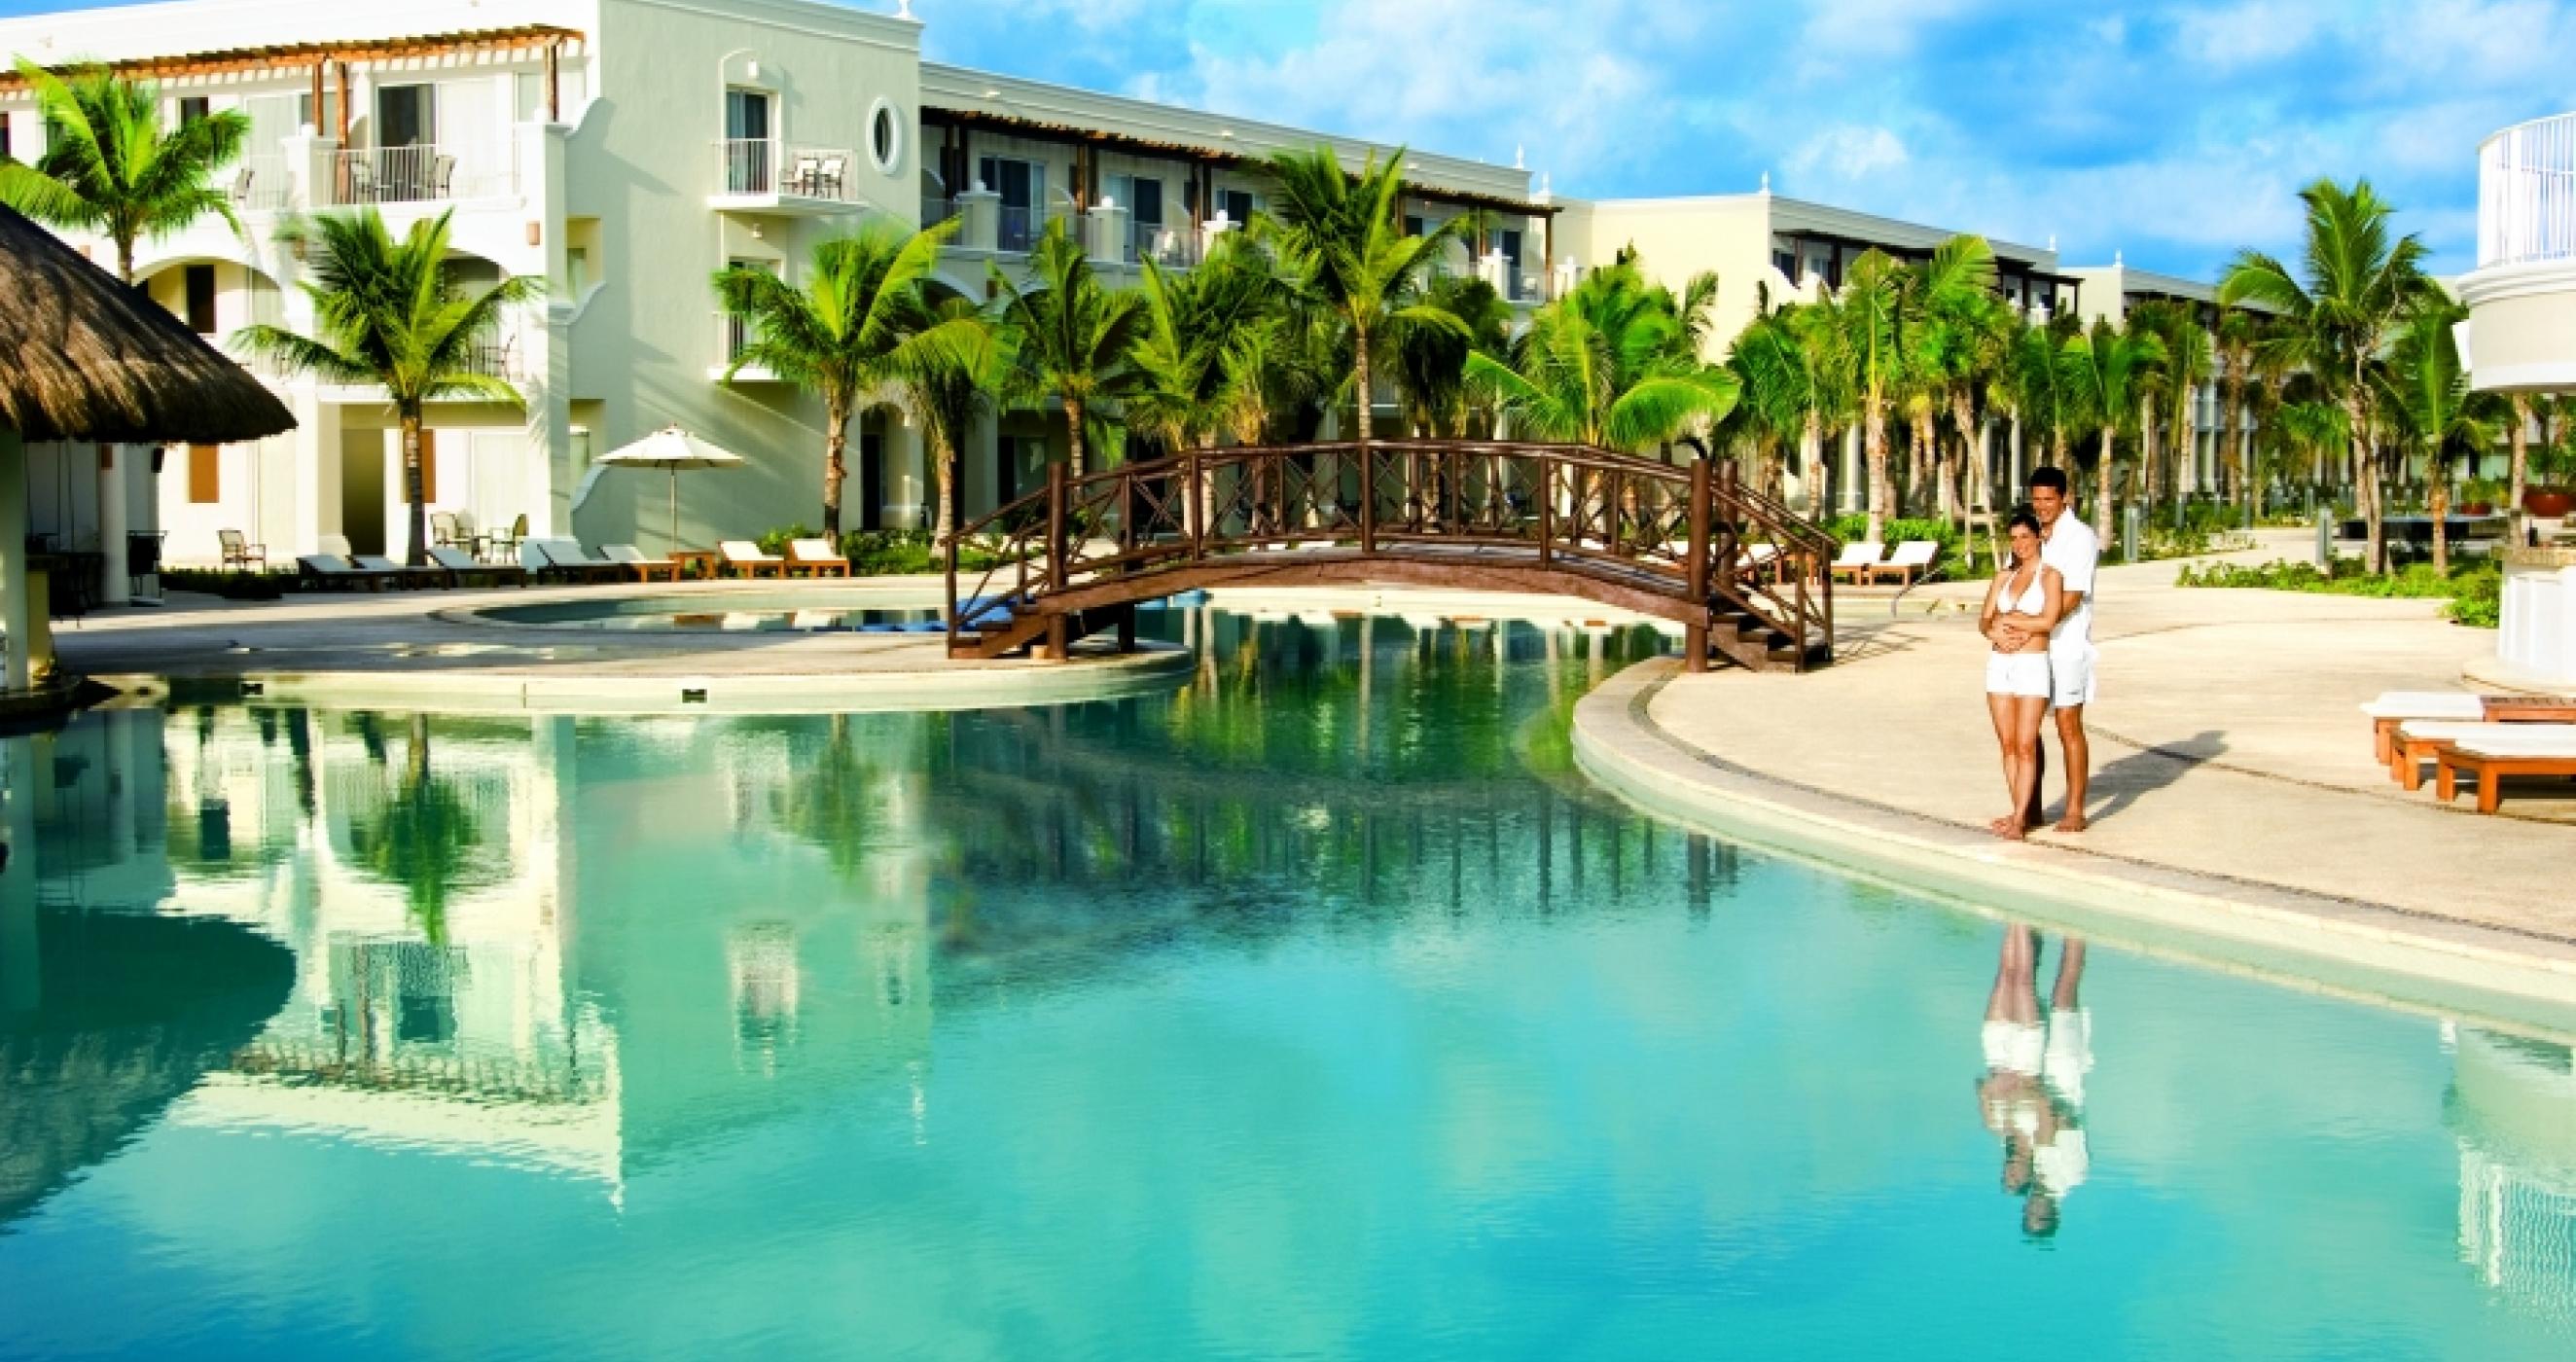 tulum dreams resort spa mexico riviera maya swimming pool resorts weddings pools hotels